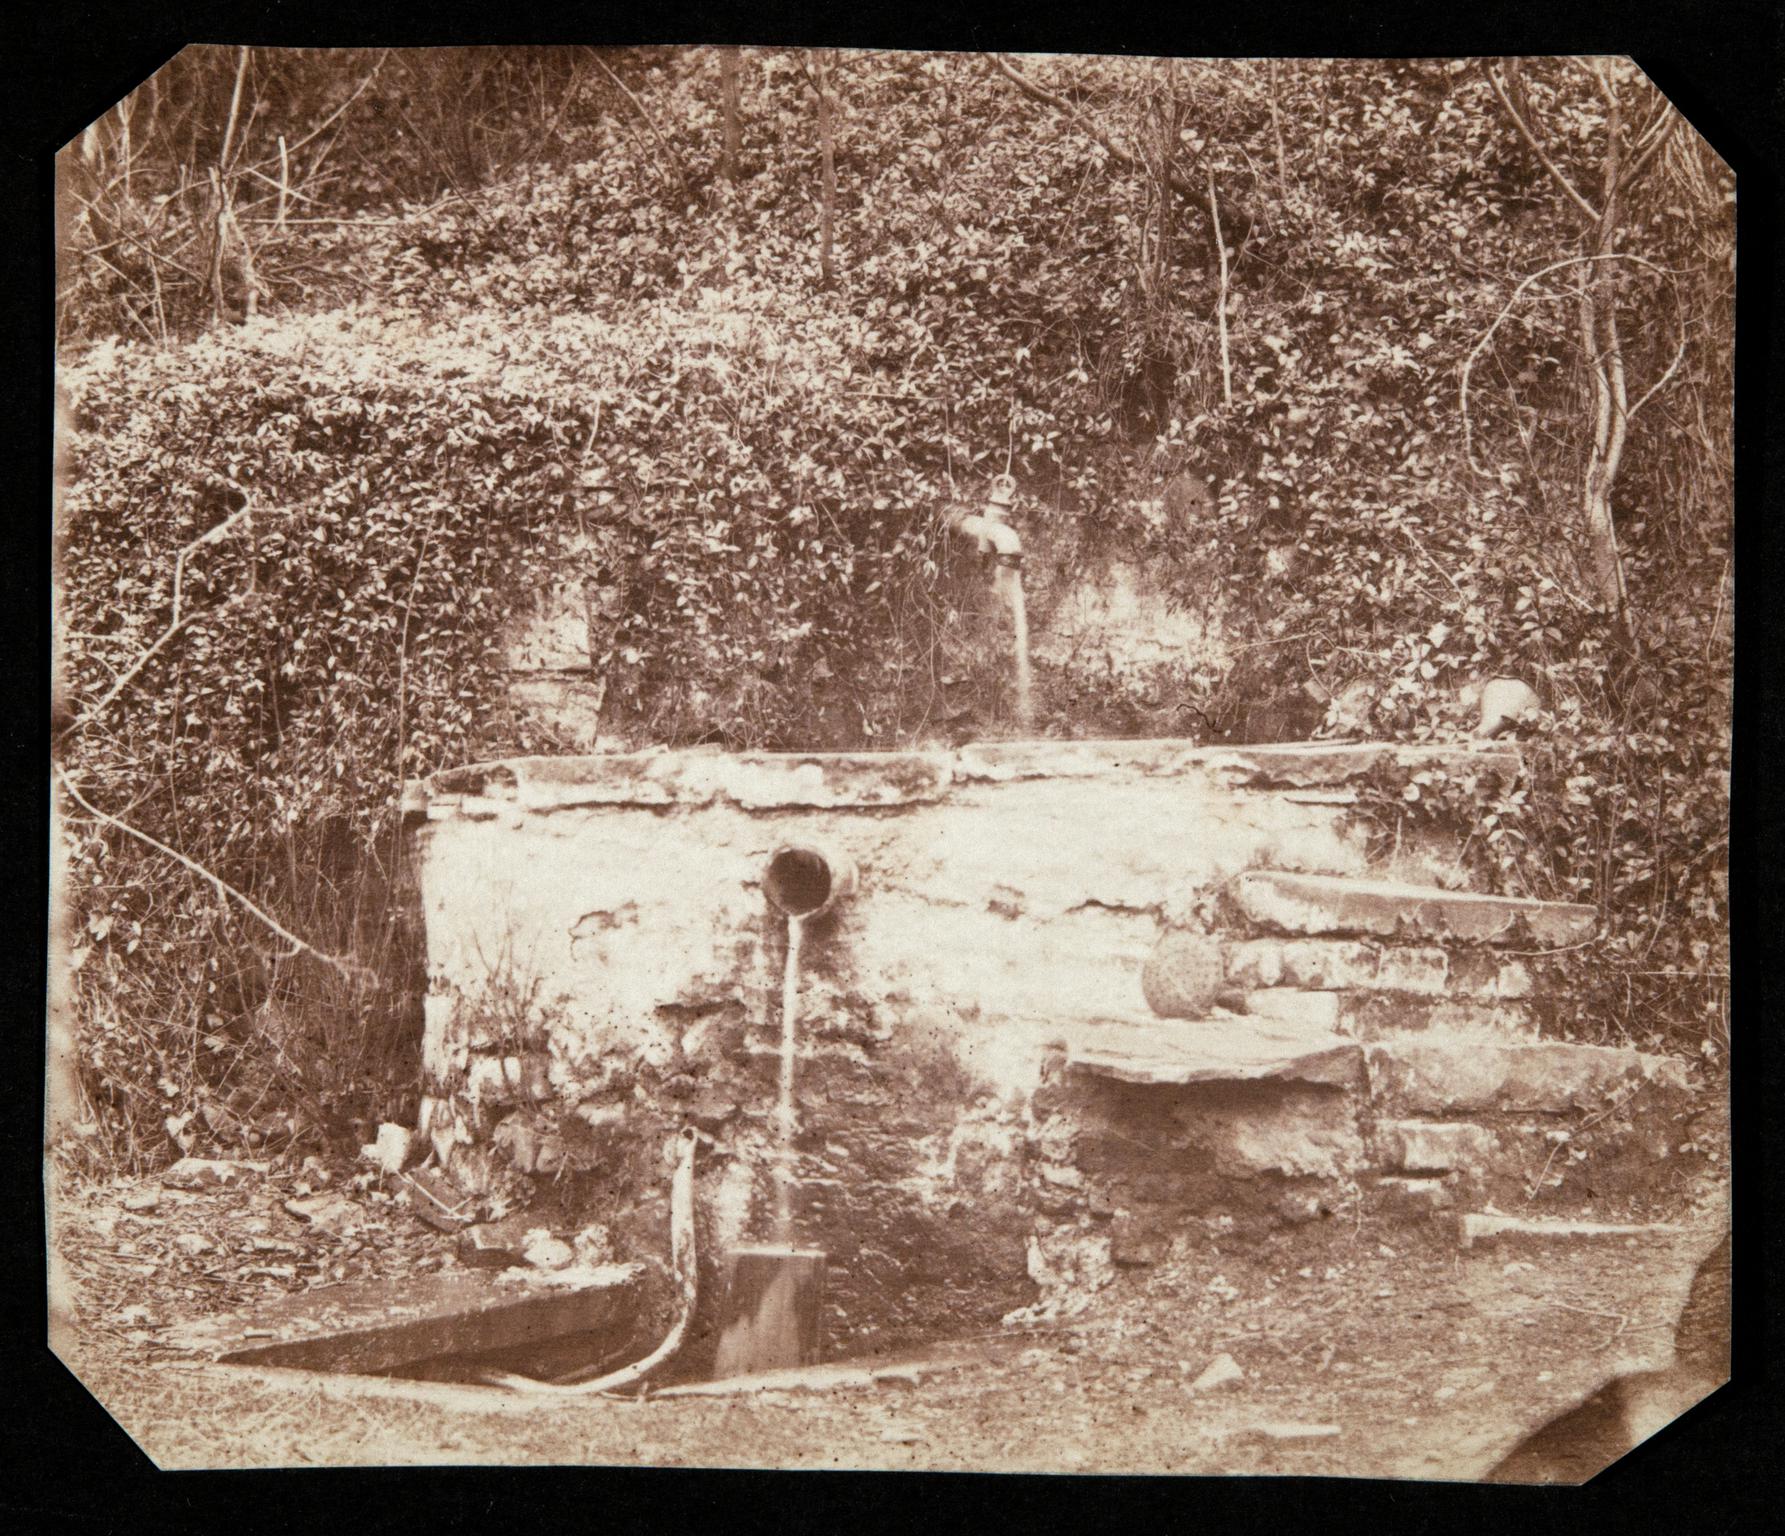 Water cistern, photograph